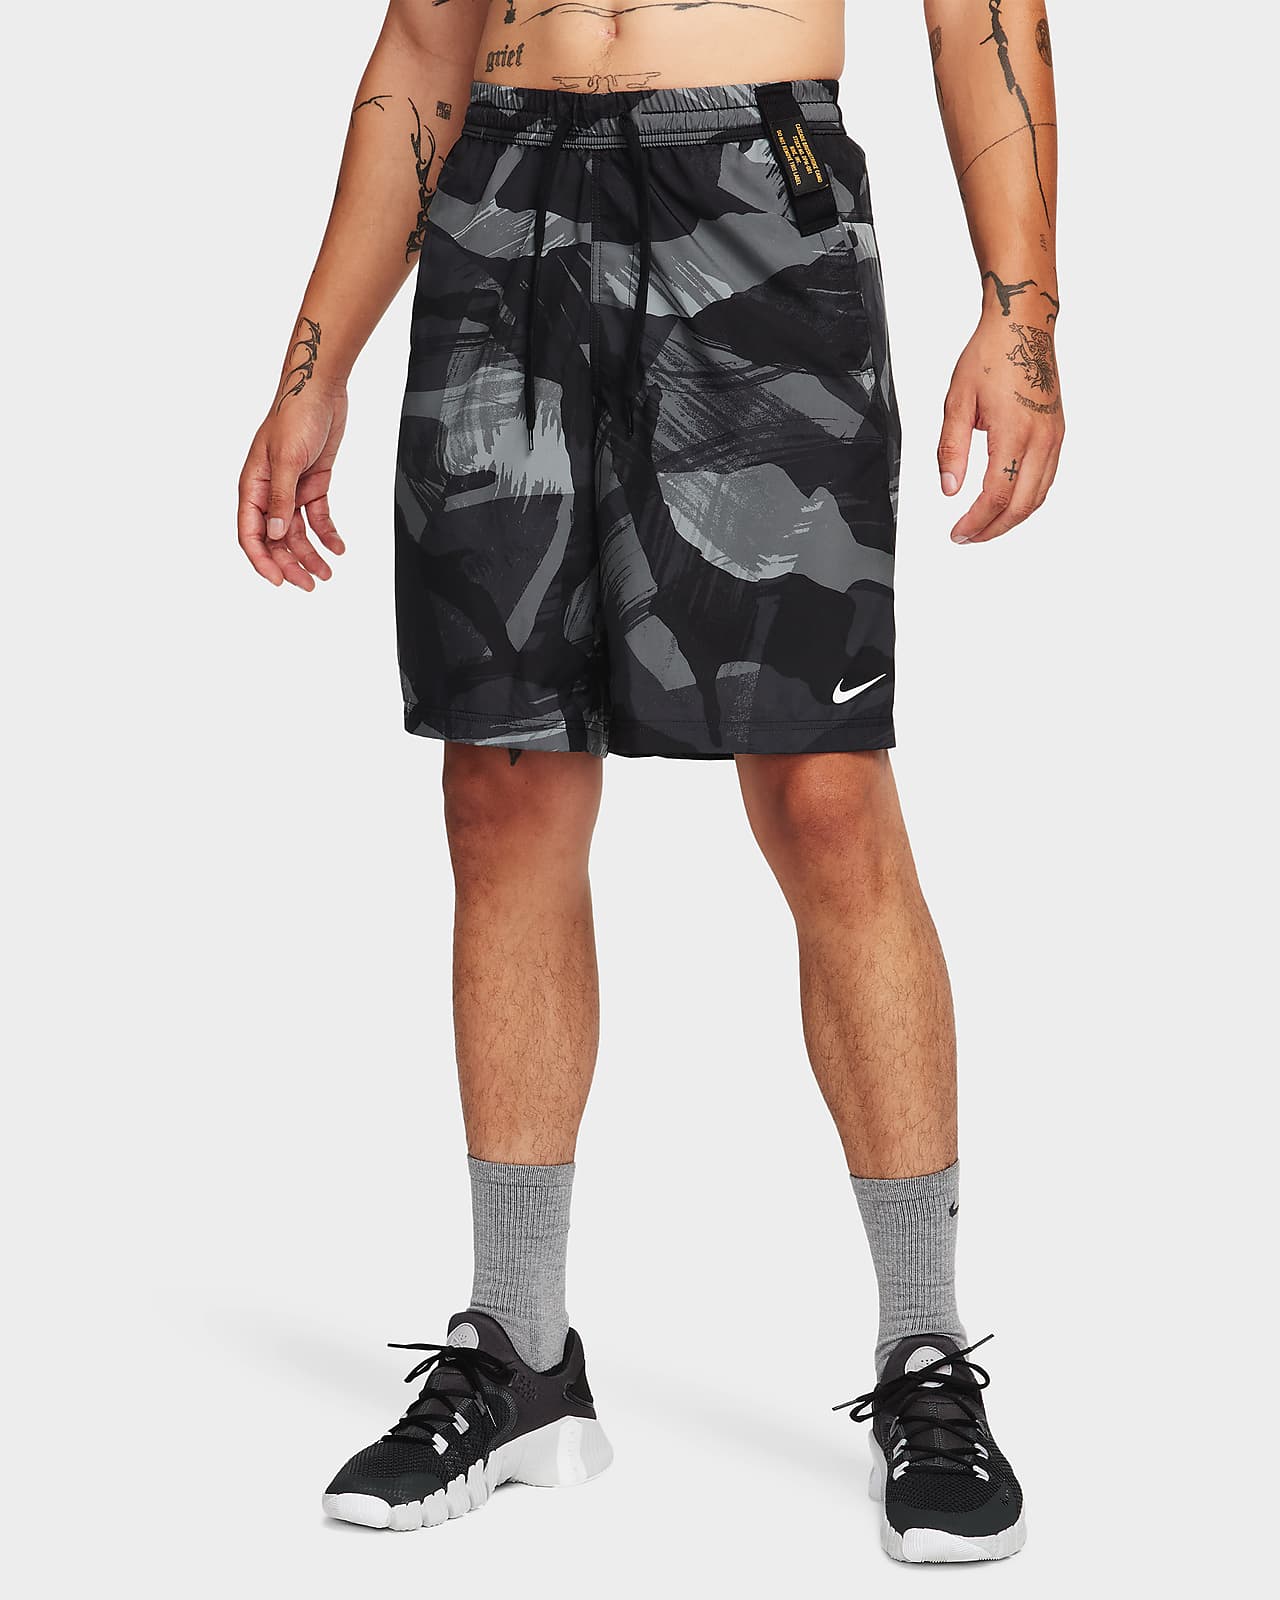 Shorts versatili Dri-FIT non foderati 23 cm Nike Form – Uomo